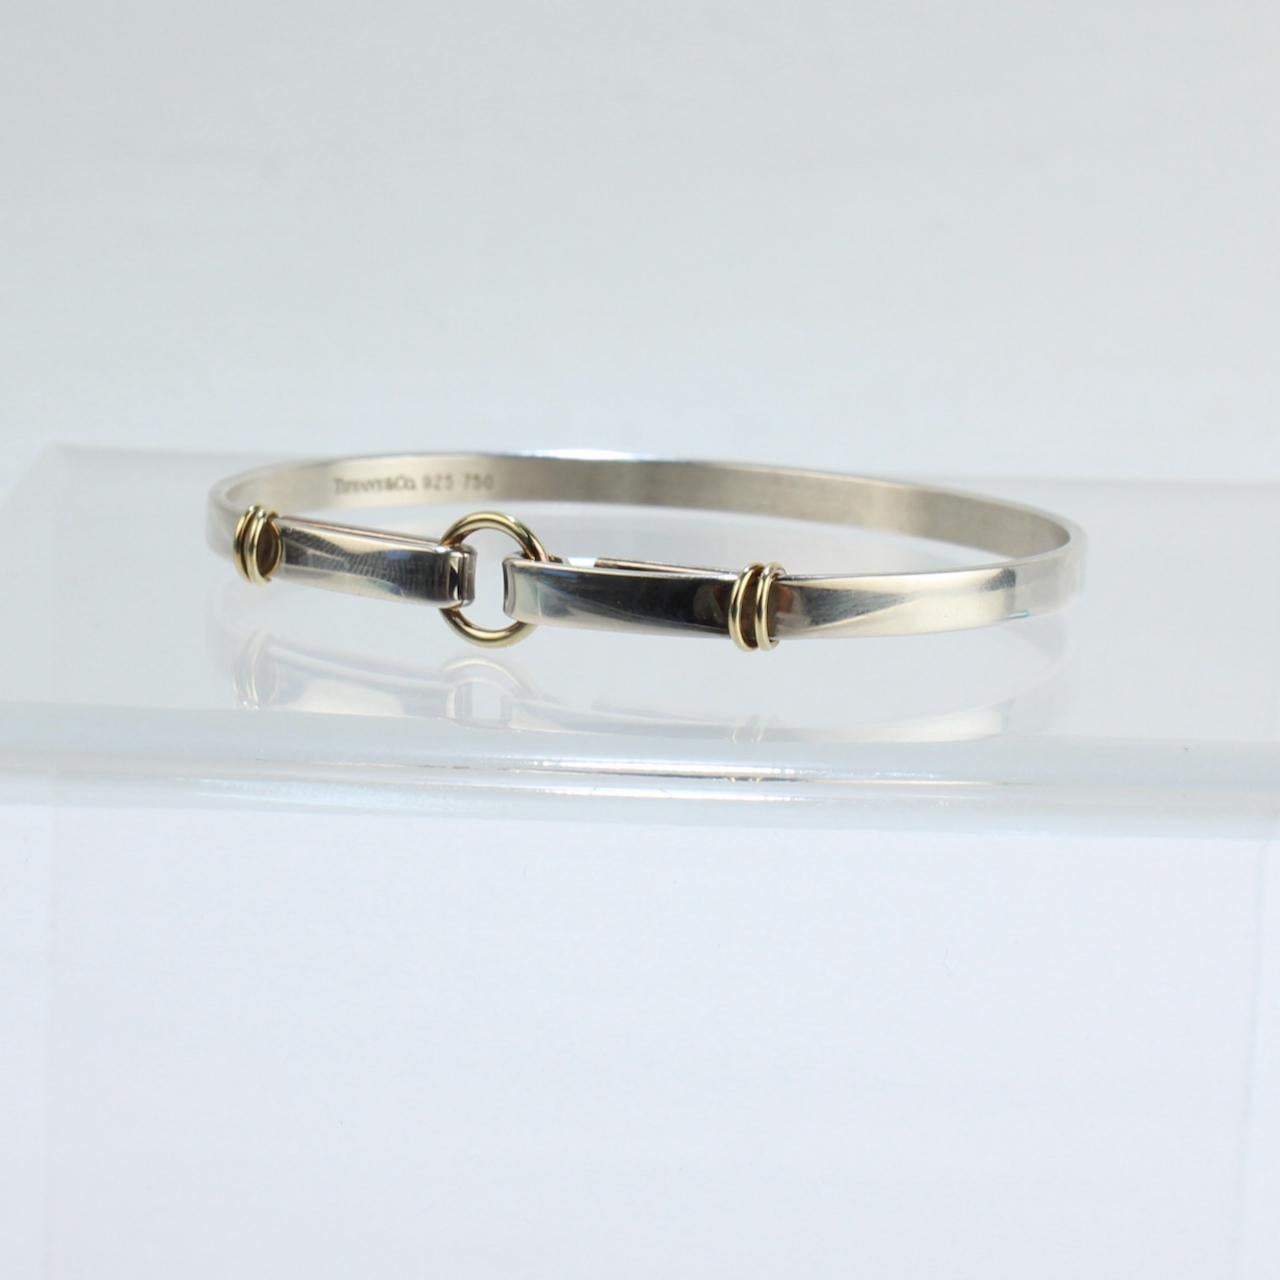 Signed Tiffany & Co. Sterling Silver & 18k Gold Hook and Circle Bangle Bracelet 4